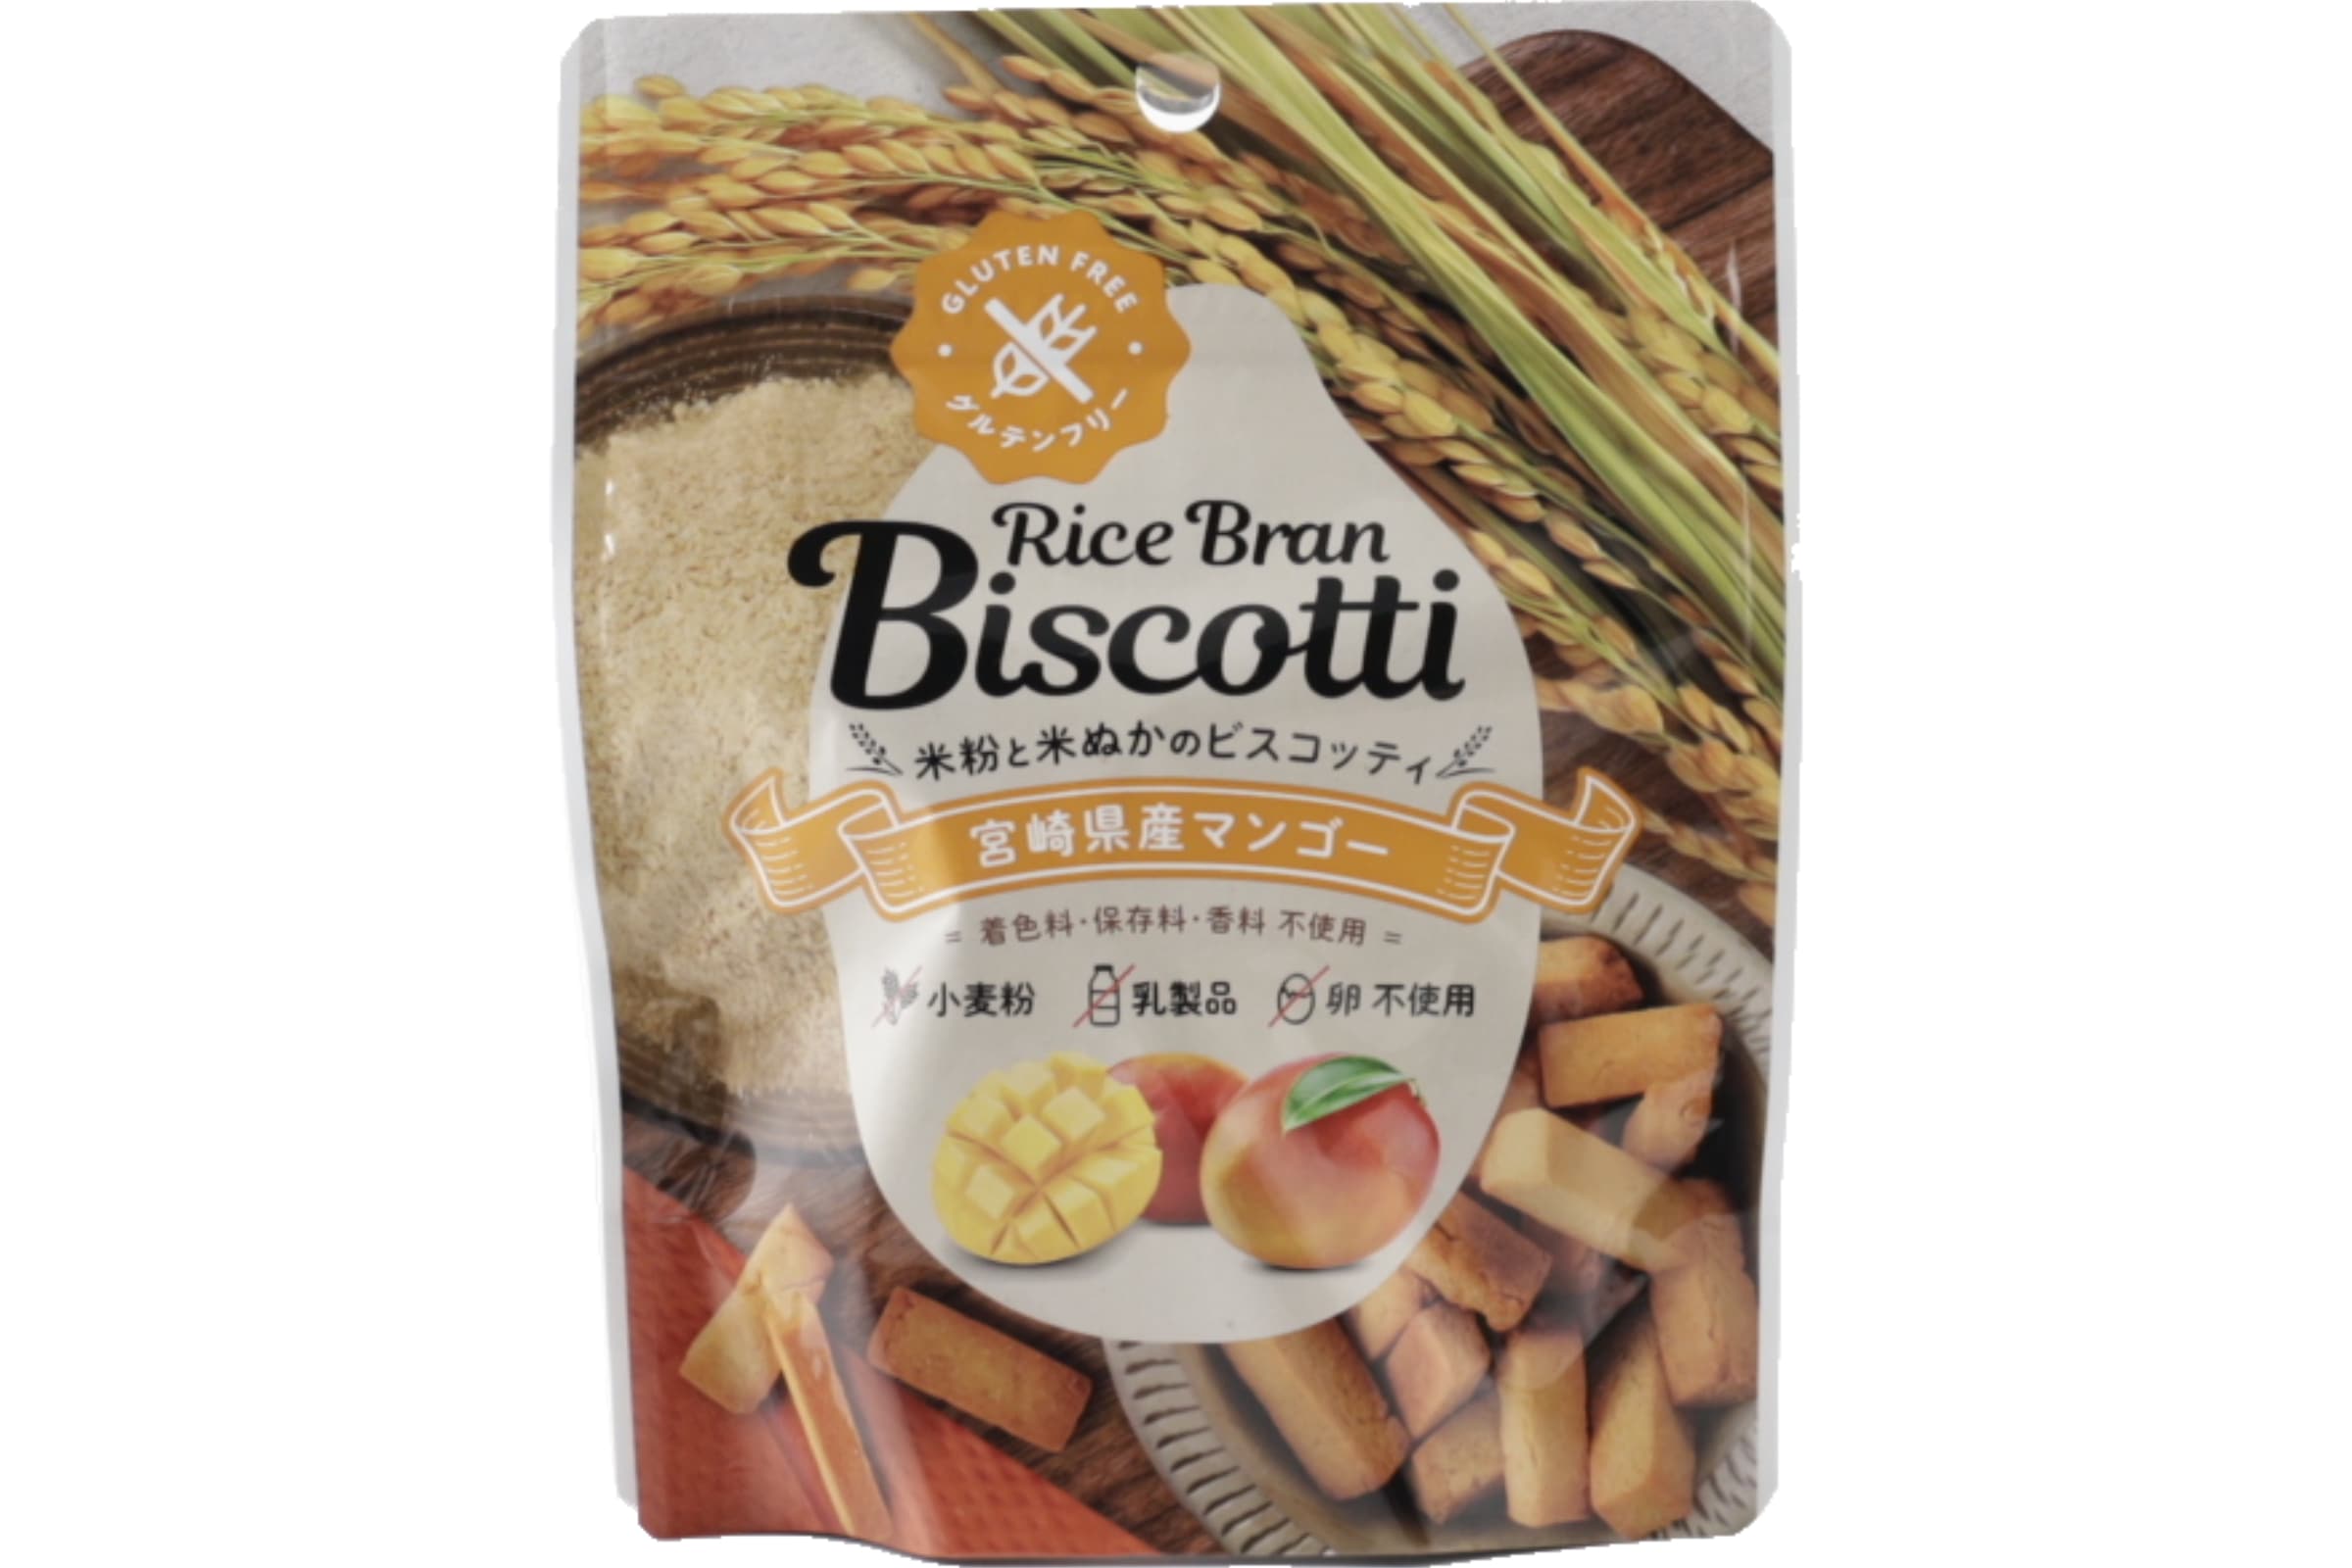 Rice Bran Biscotti宮崎県産マンゴー